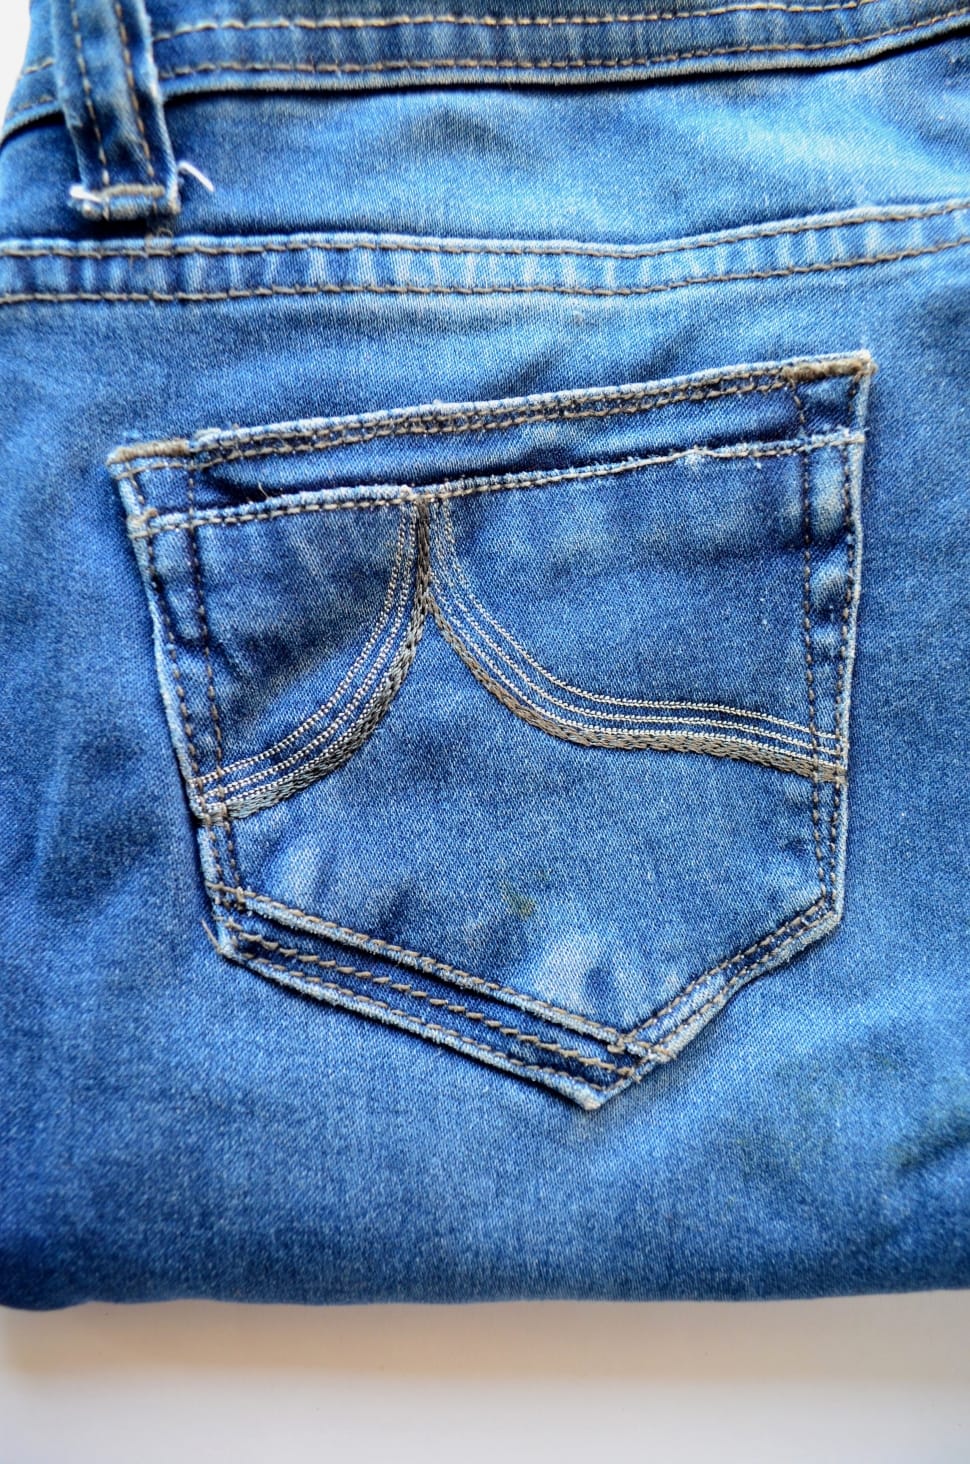 Blue, Jeans, Pocket, Fashion, Clothing, jeans, denim preview